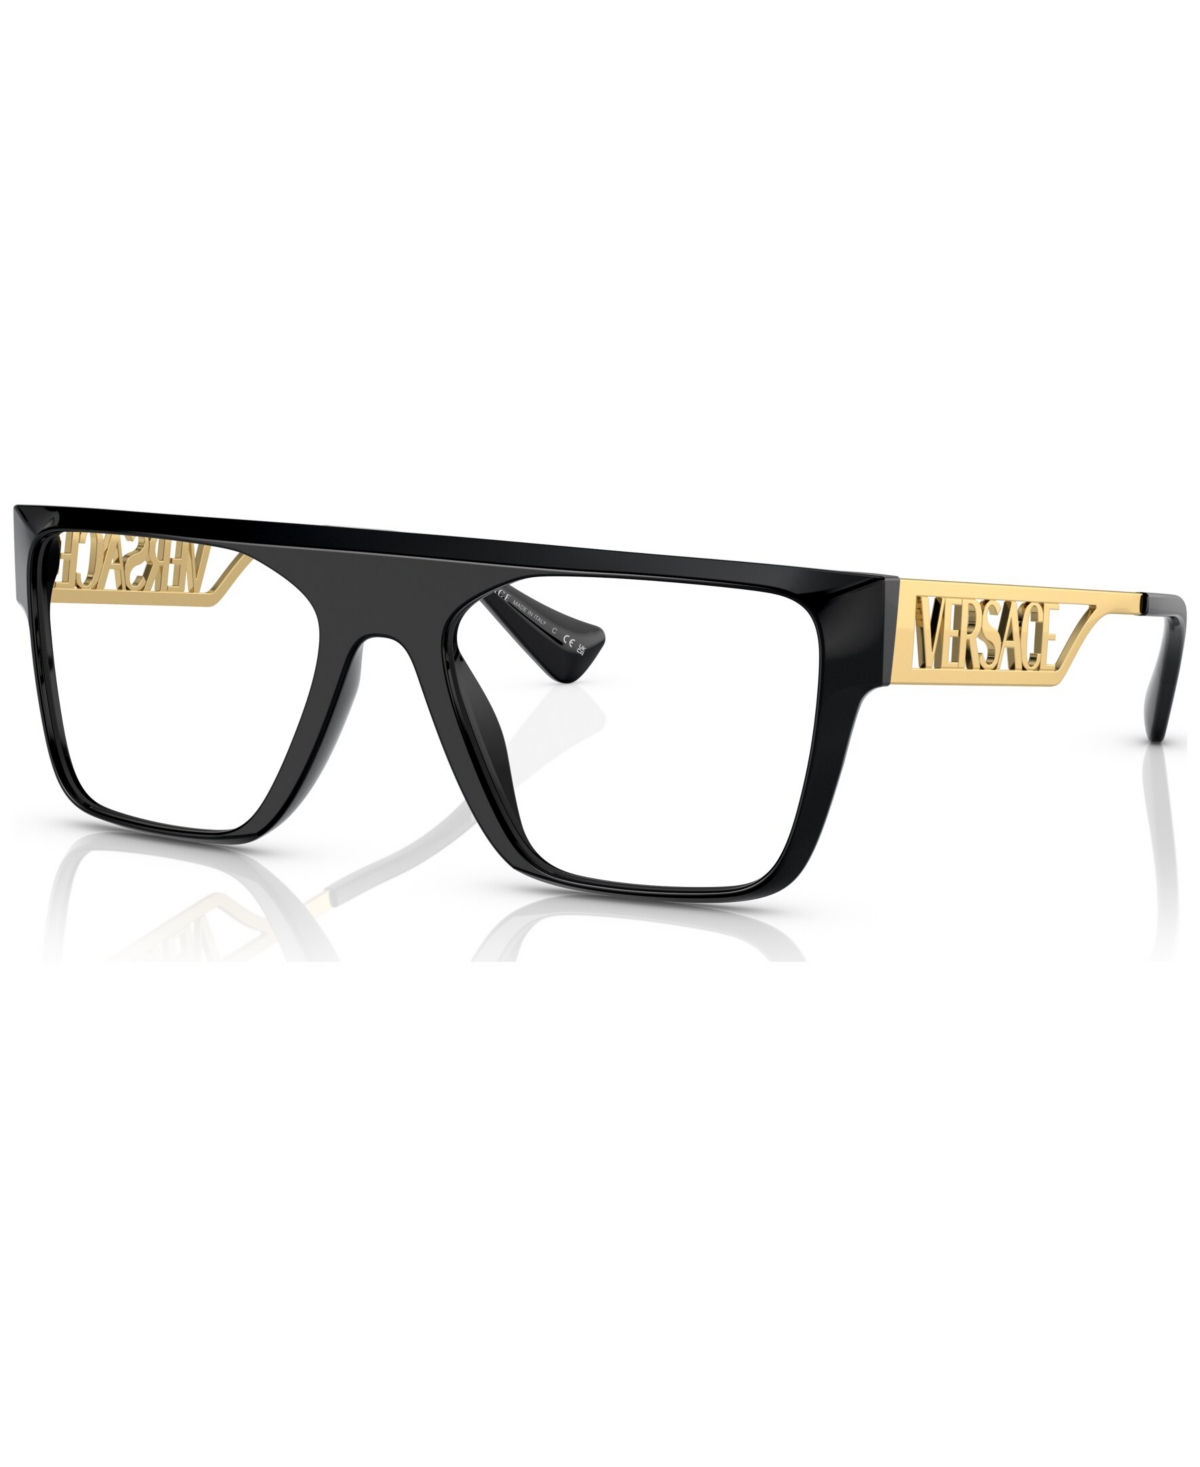 Men's Rectangle Eyeglasses, VE3326U53-o - Black